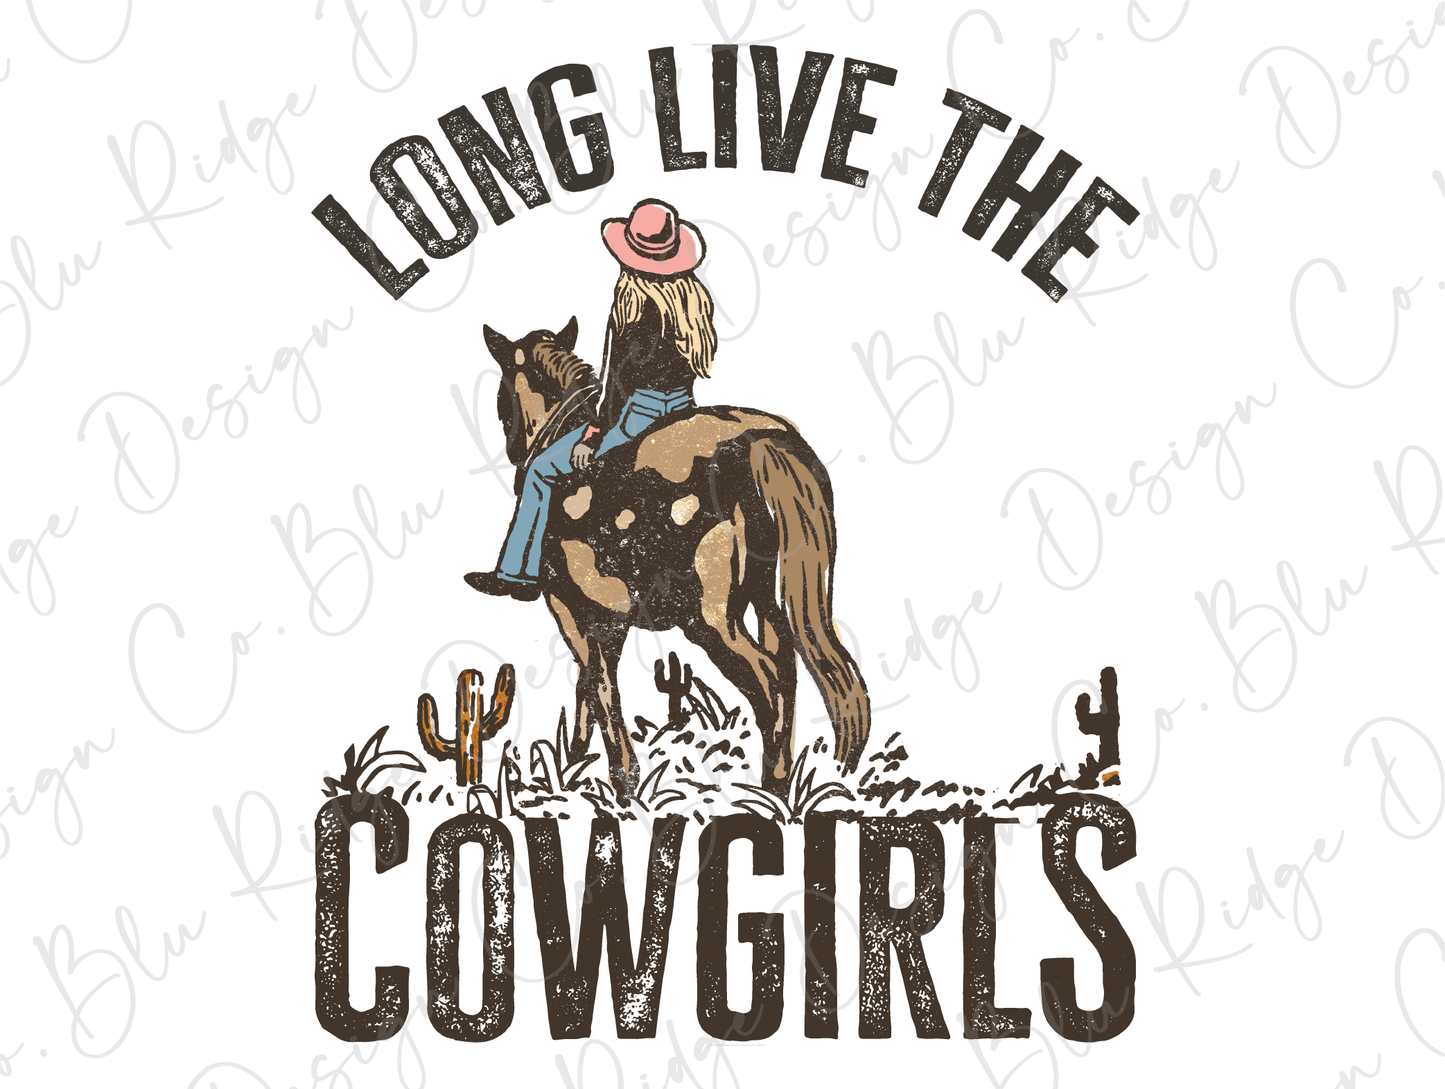 Long Live the Cowgirls Boho Western Desert Design Direct To Film (DTF) Transfer